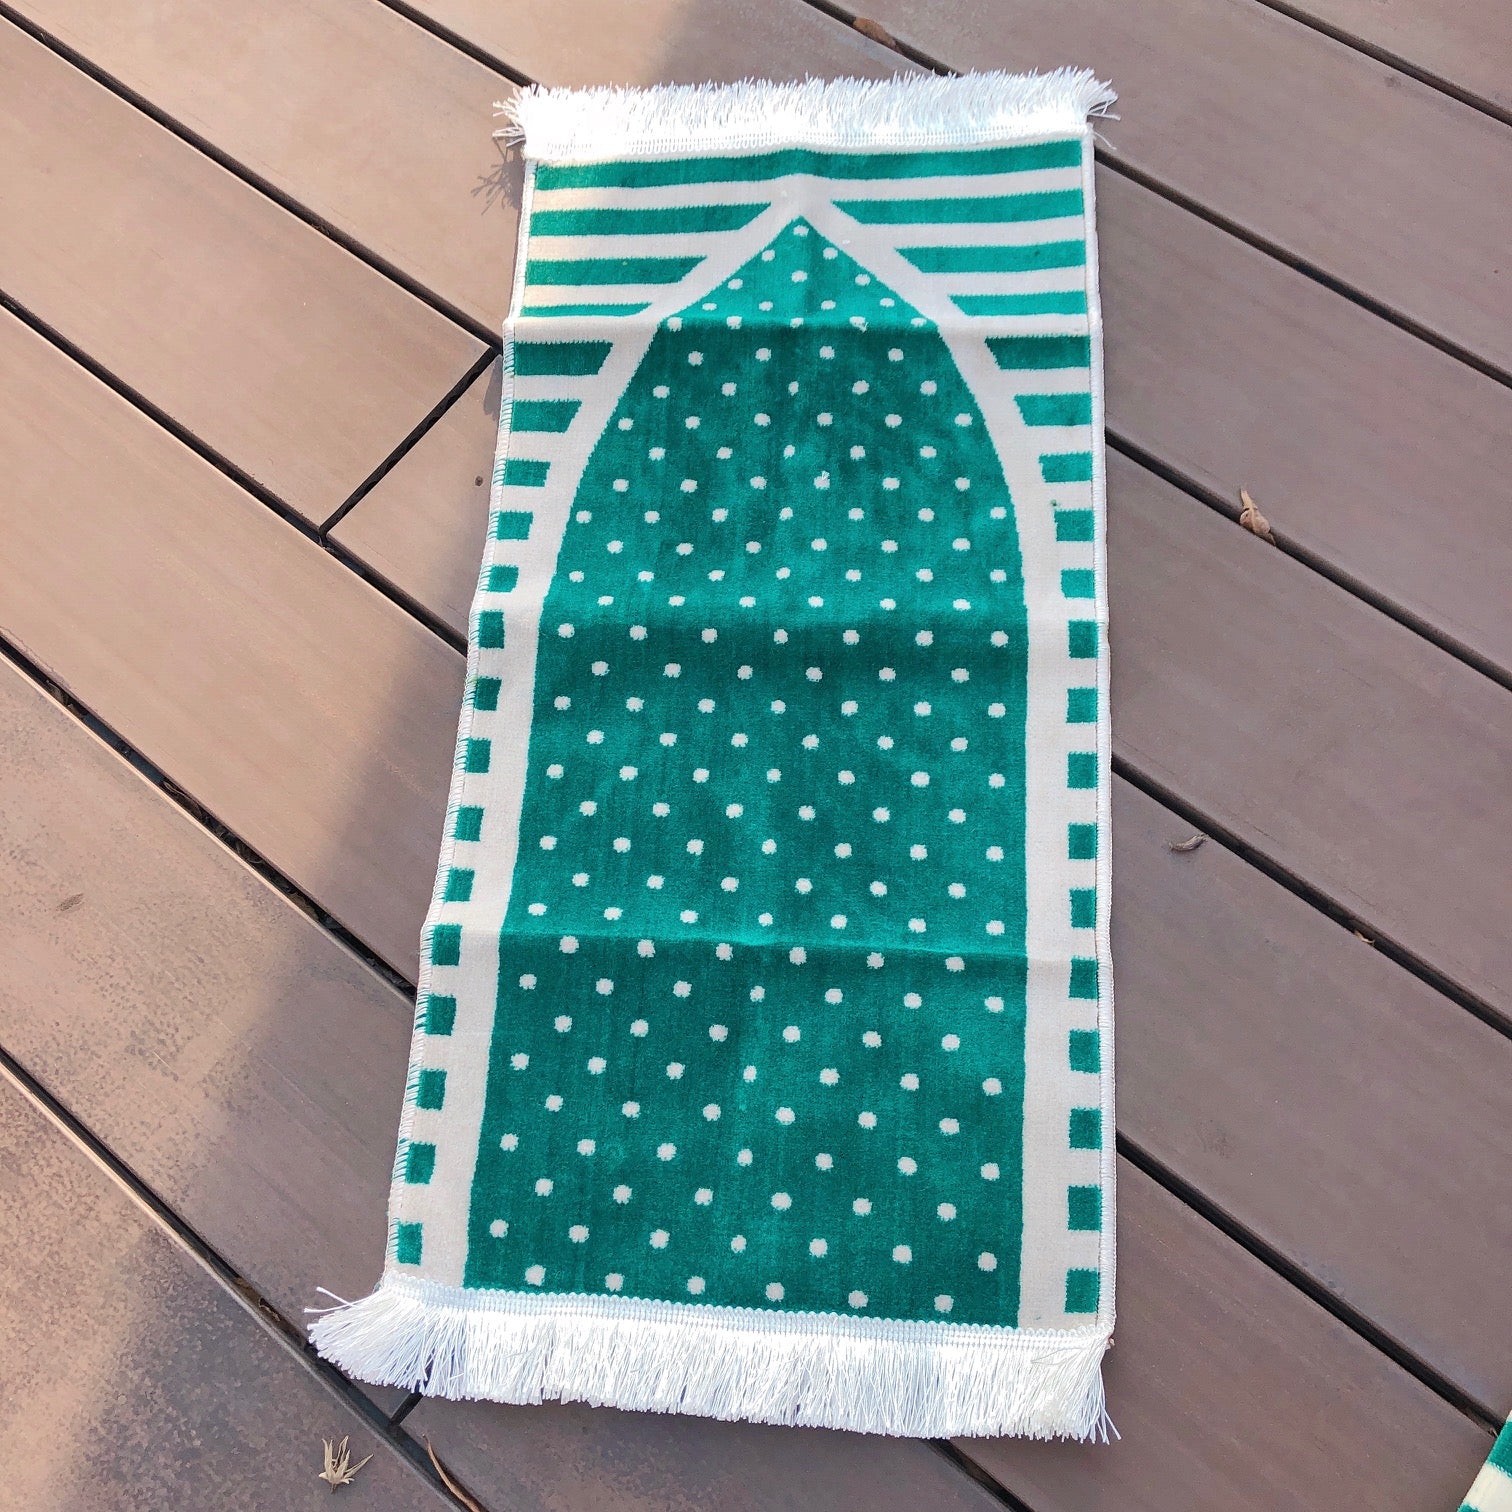 Toddler prayer rug in green